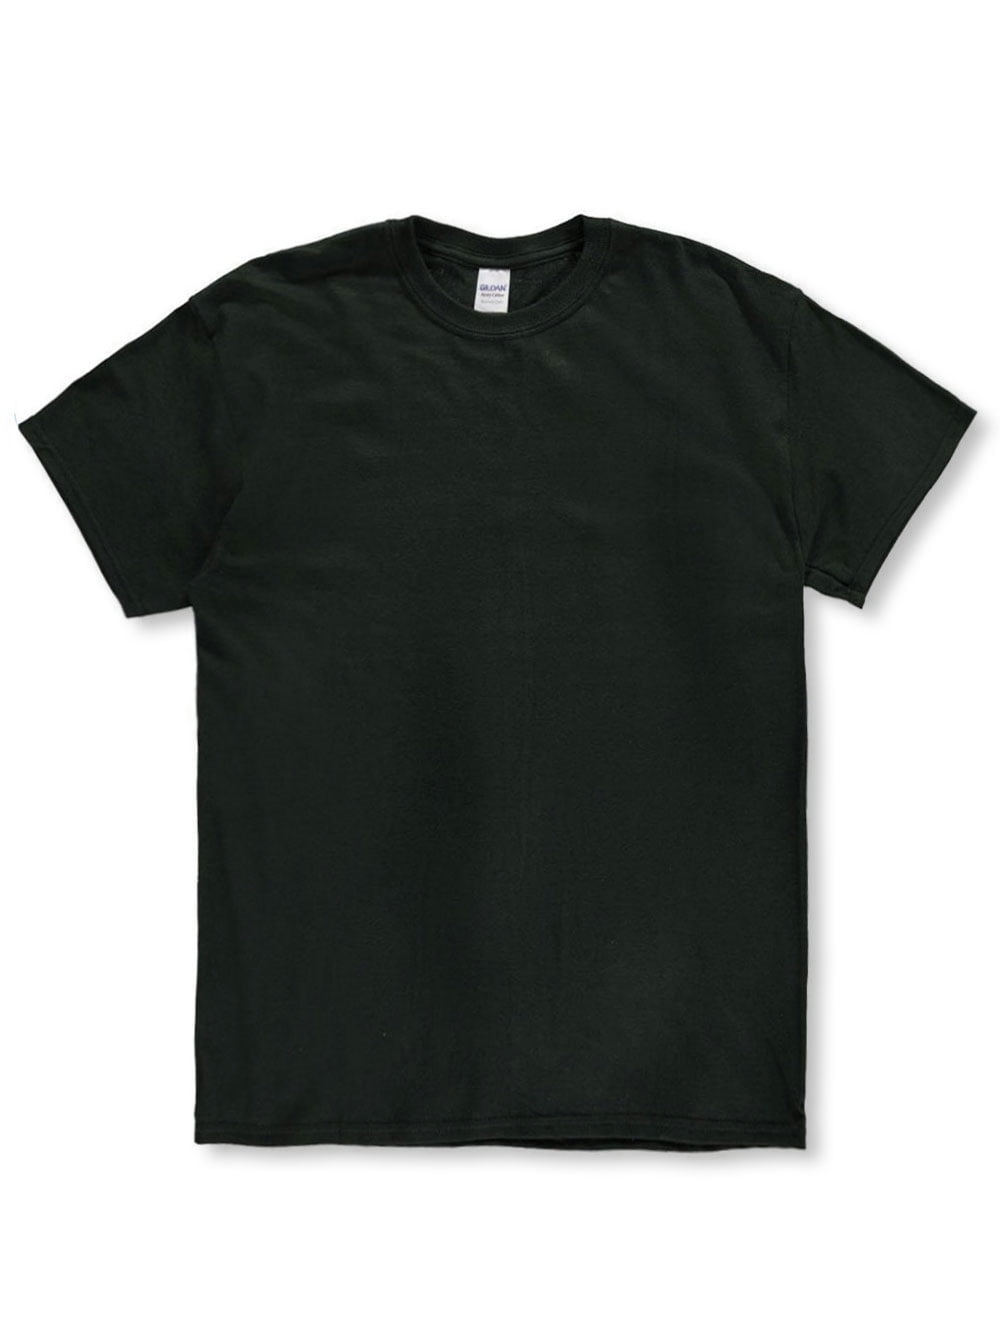 Gildan Adults' Unisex T-Shirt (Adult Sizes S - 4XL) - black, m (Big ...